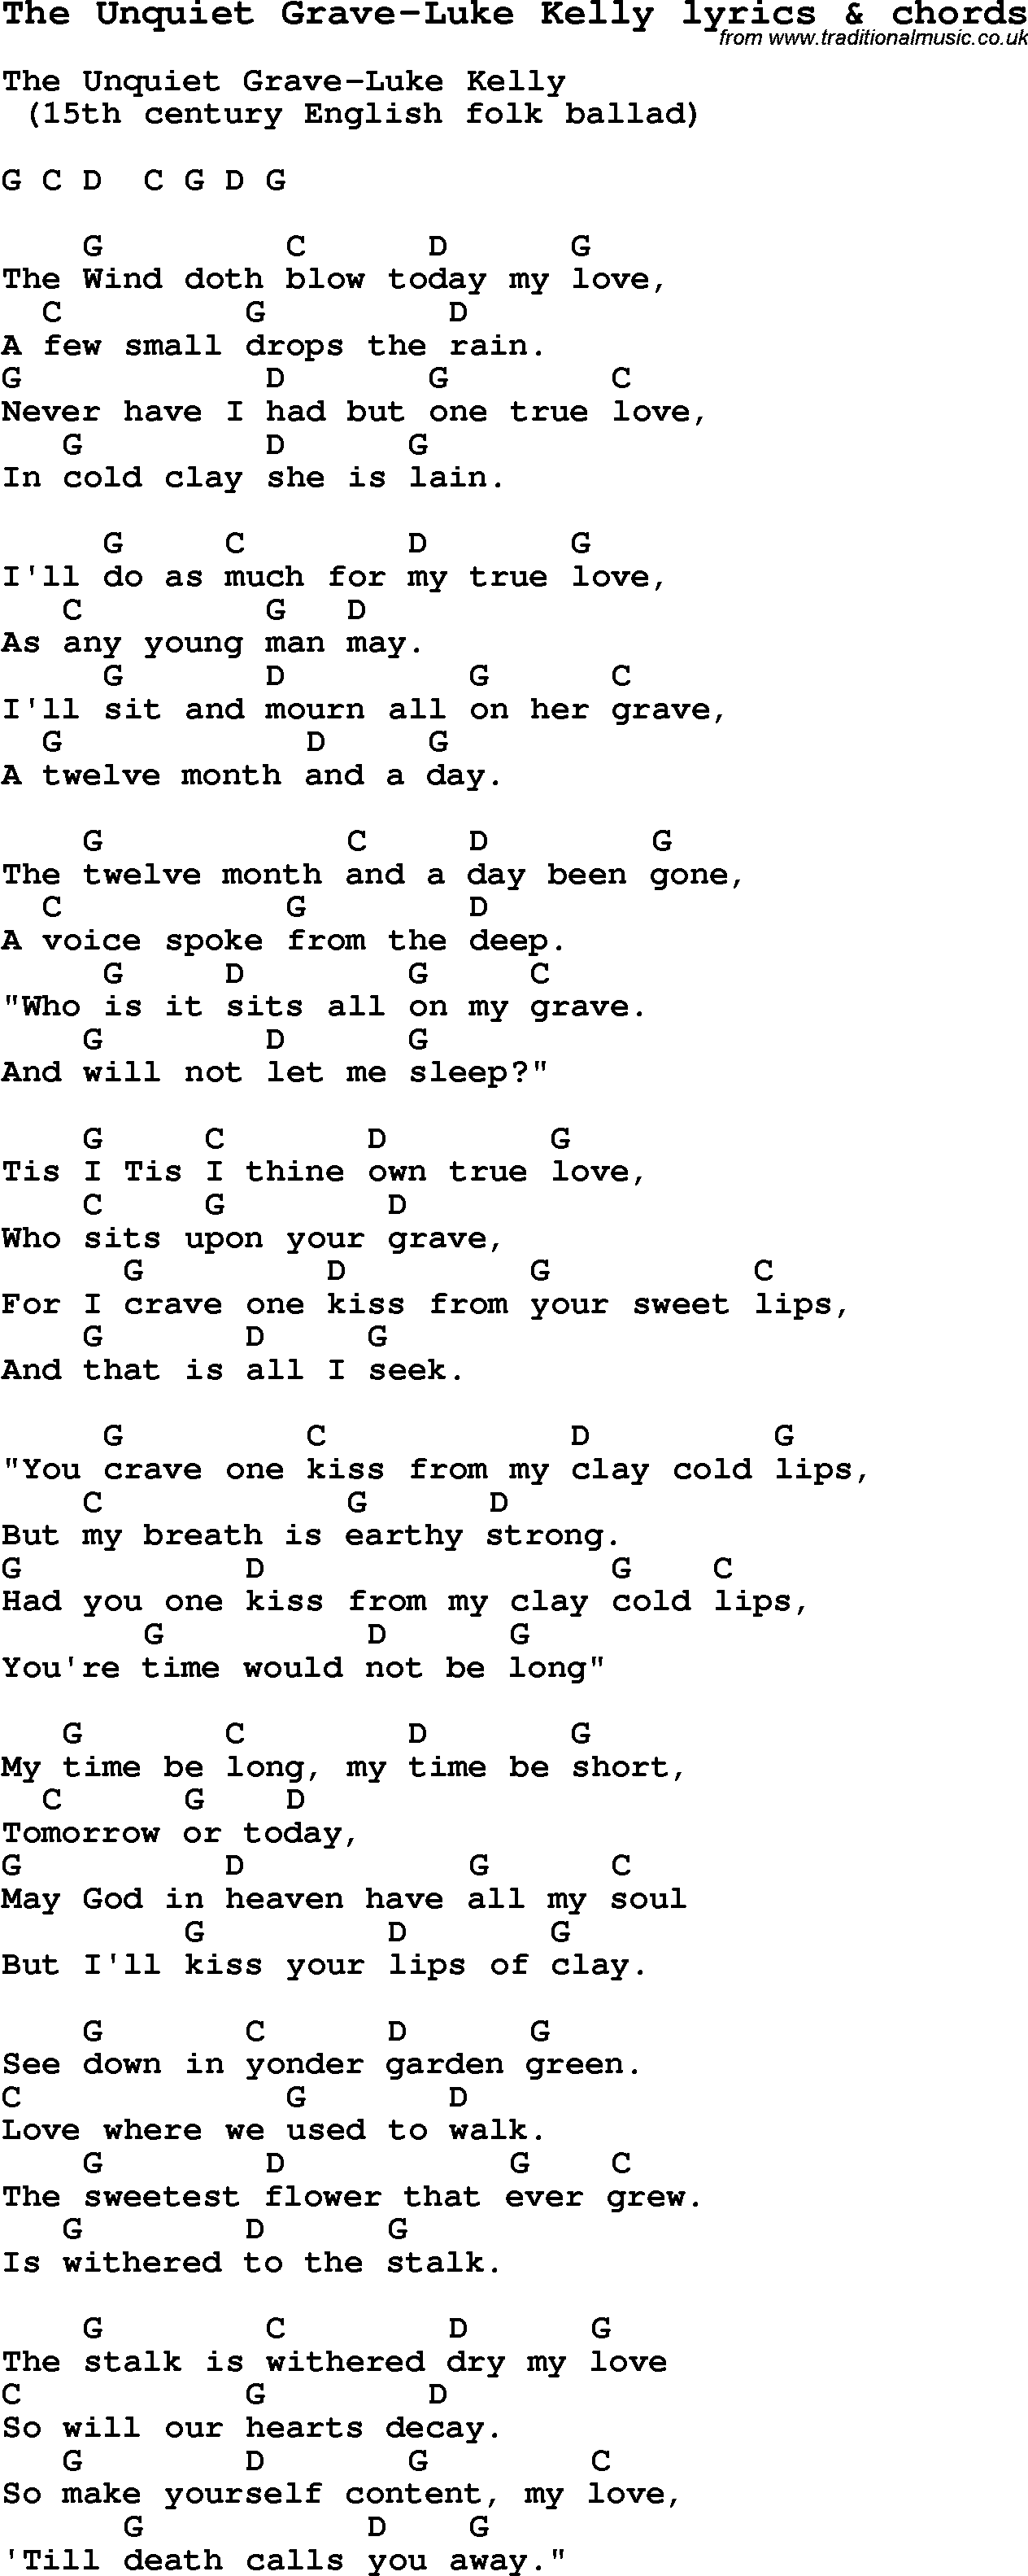 Love Song Lyrics for: The Unquiet Grave-Luke Kelly with chords for Ukulele, Guitar Banjo etc.